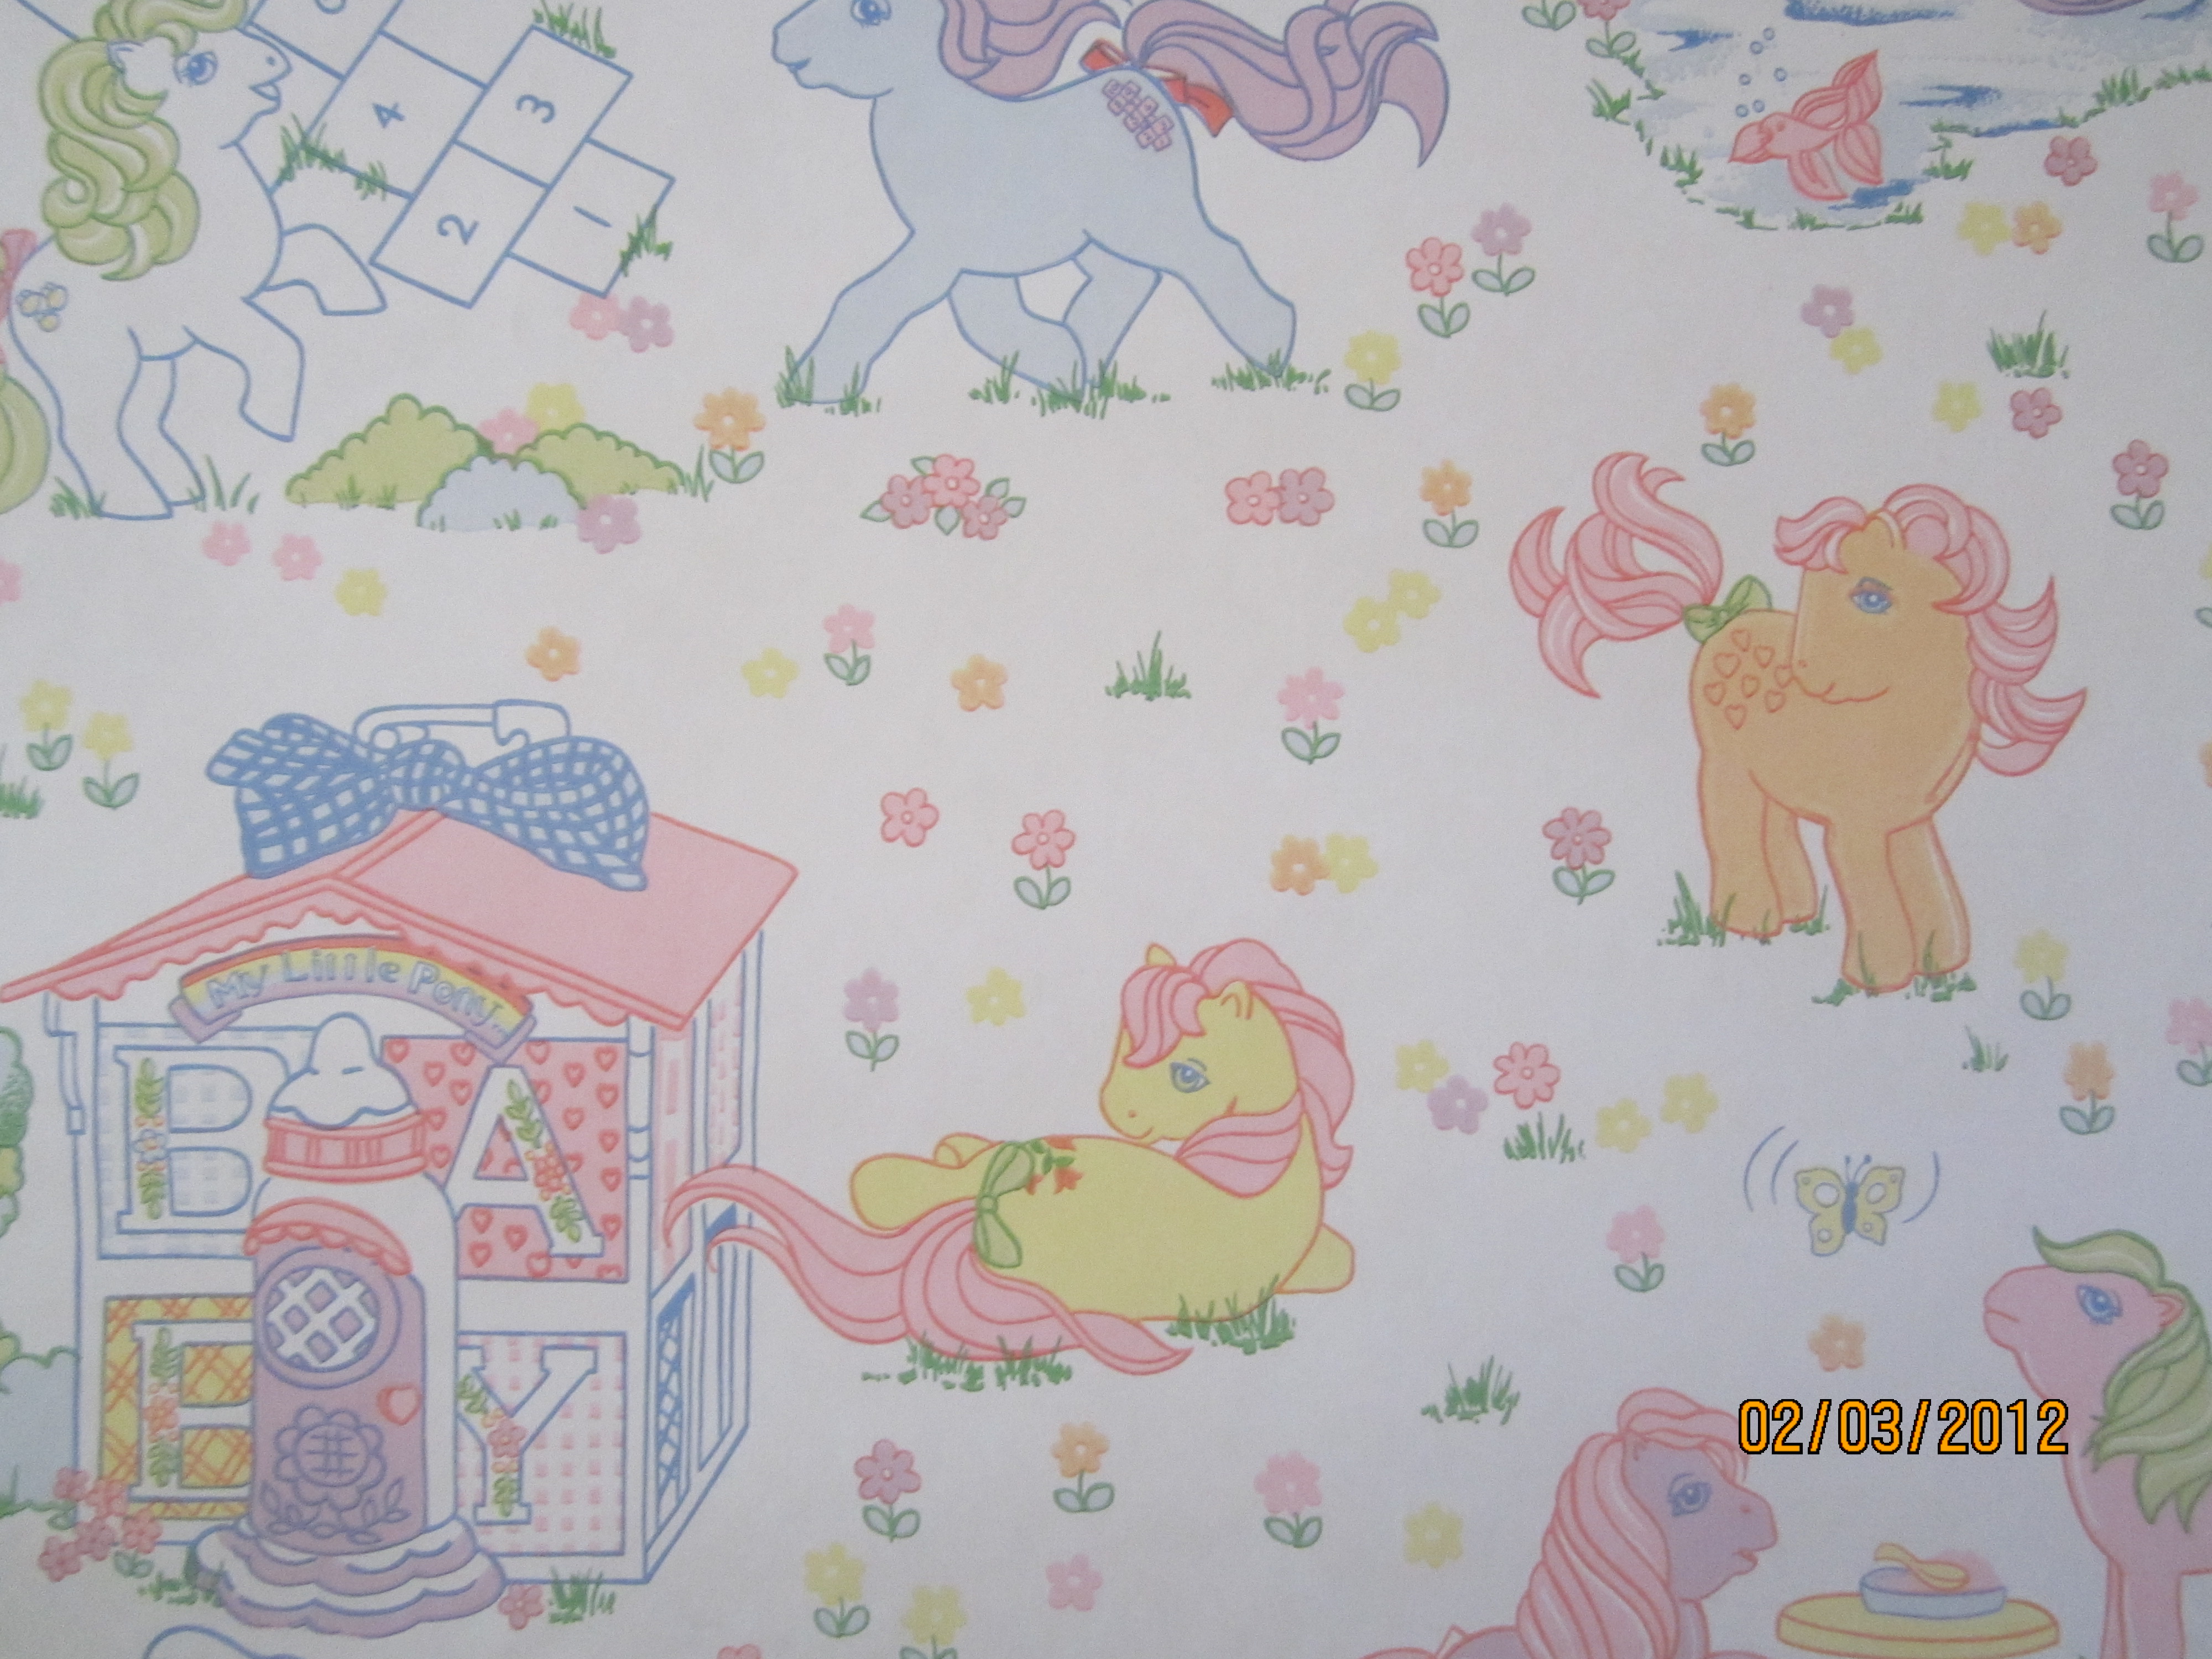 my little pony wallpaper for bedroom,child art,pink,wallpaper,room,art